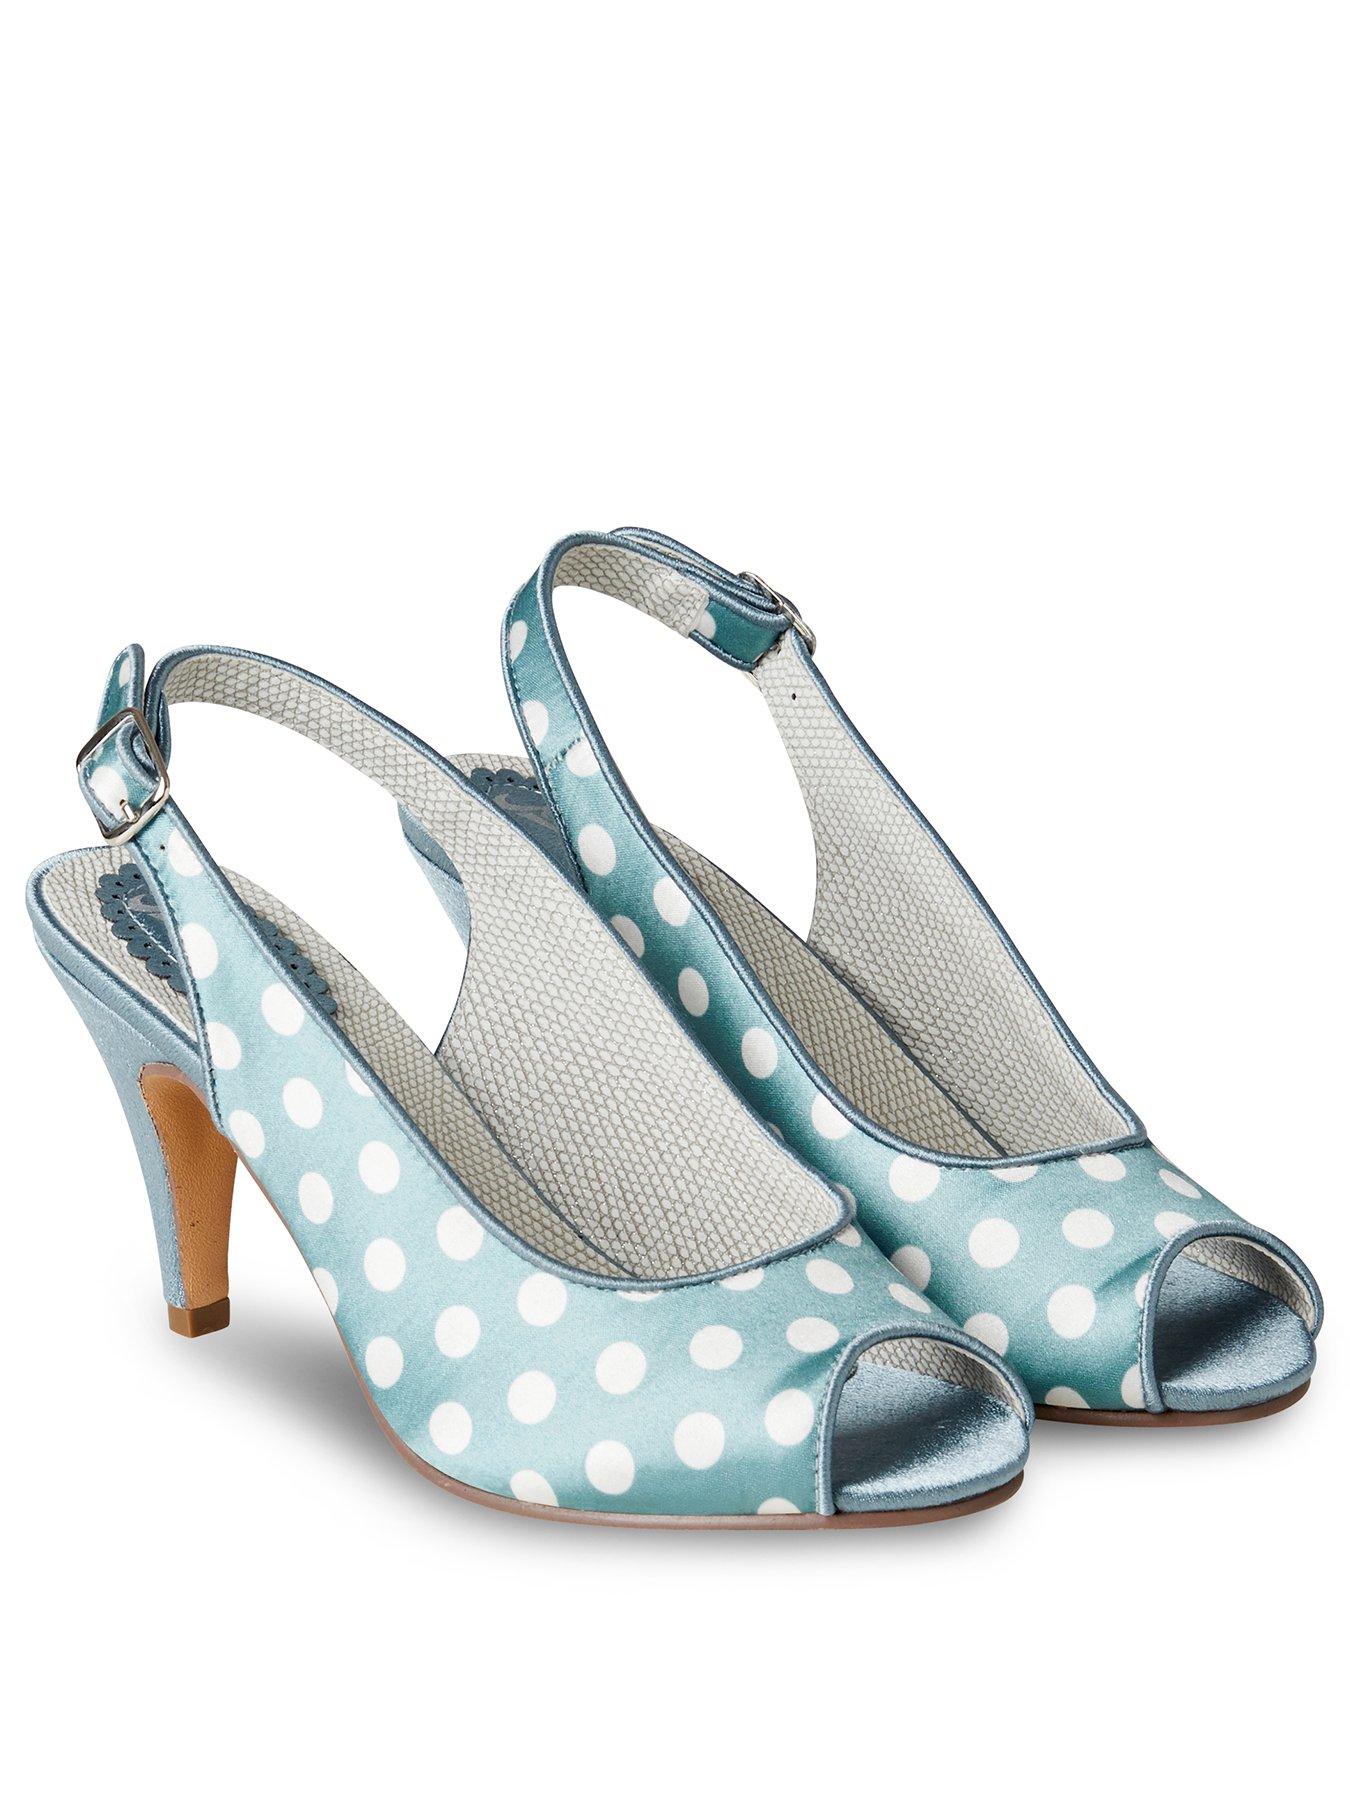 blue heels ireland